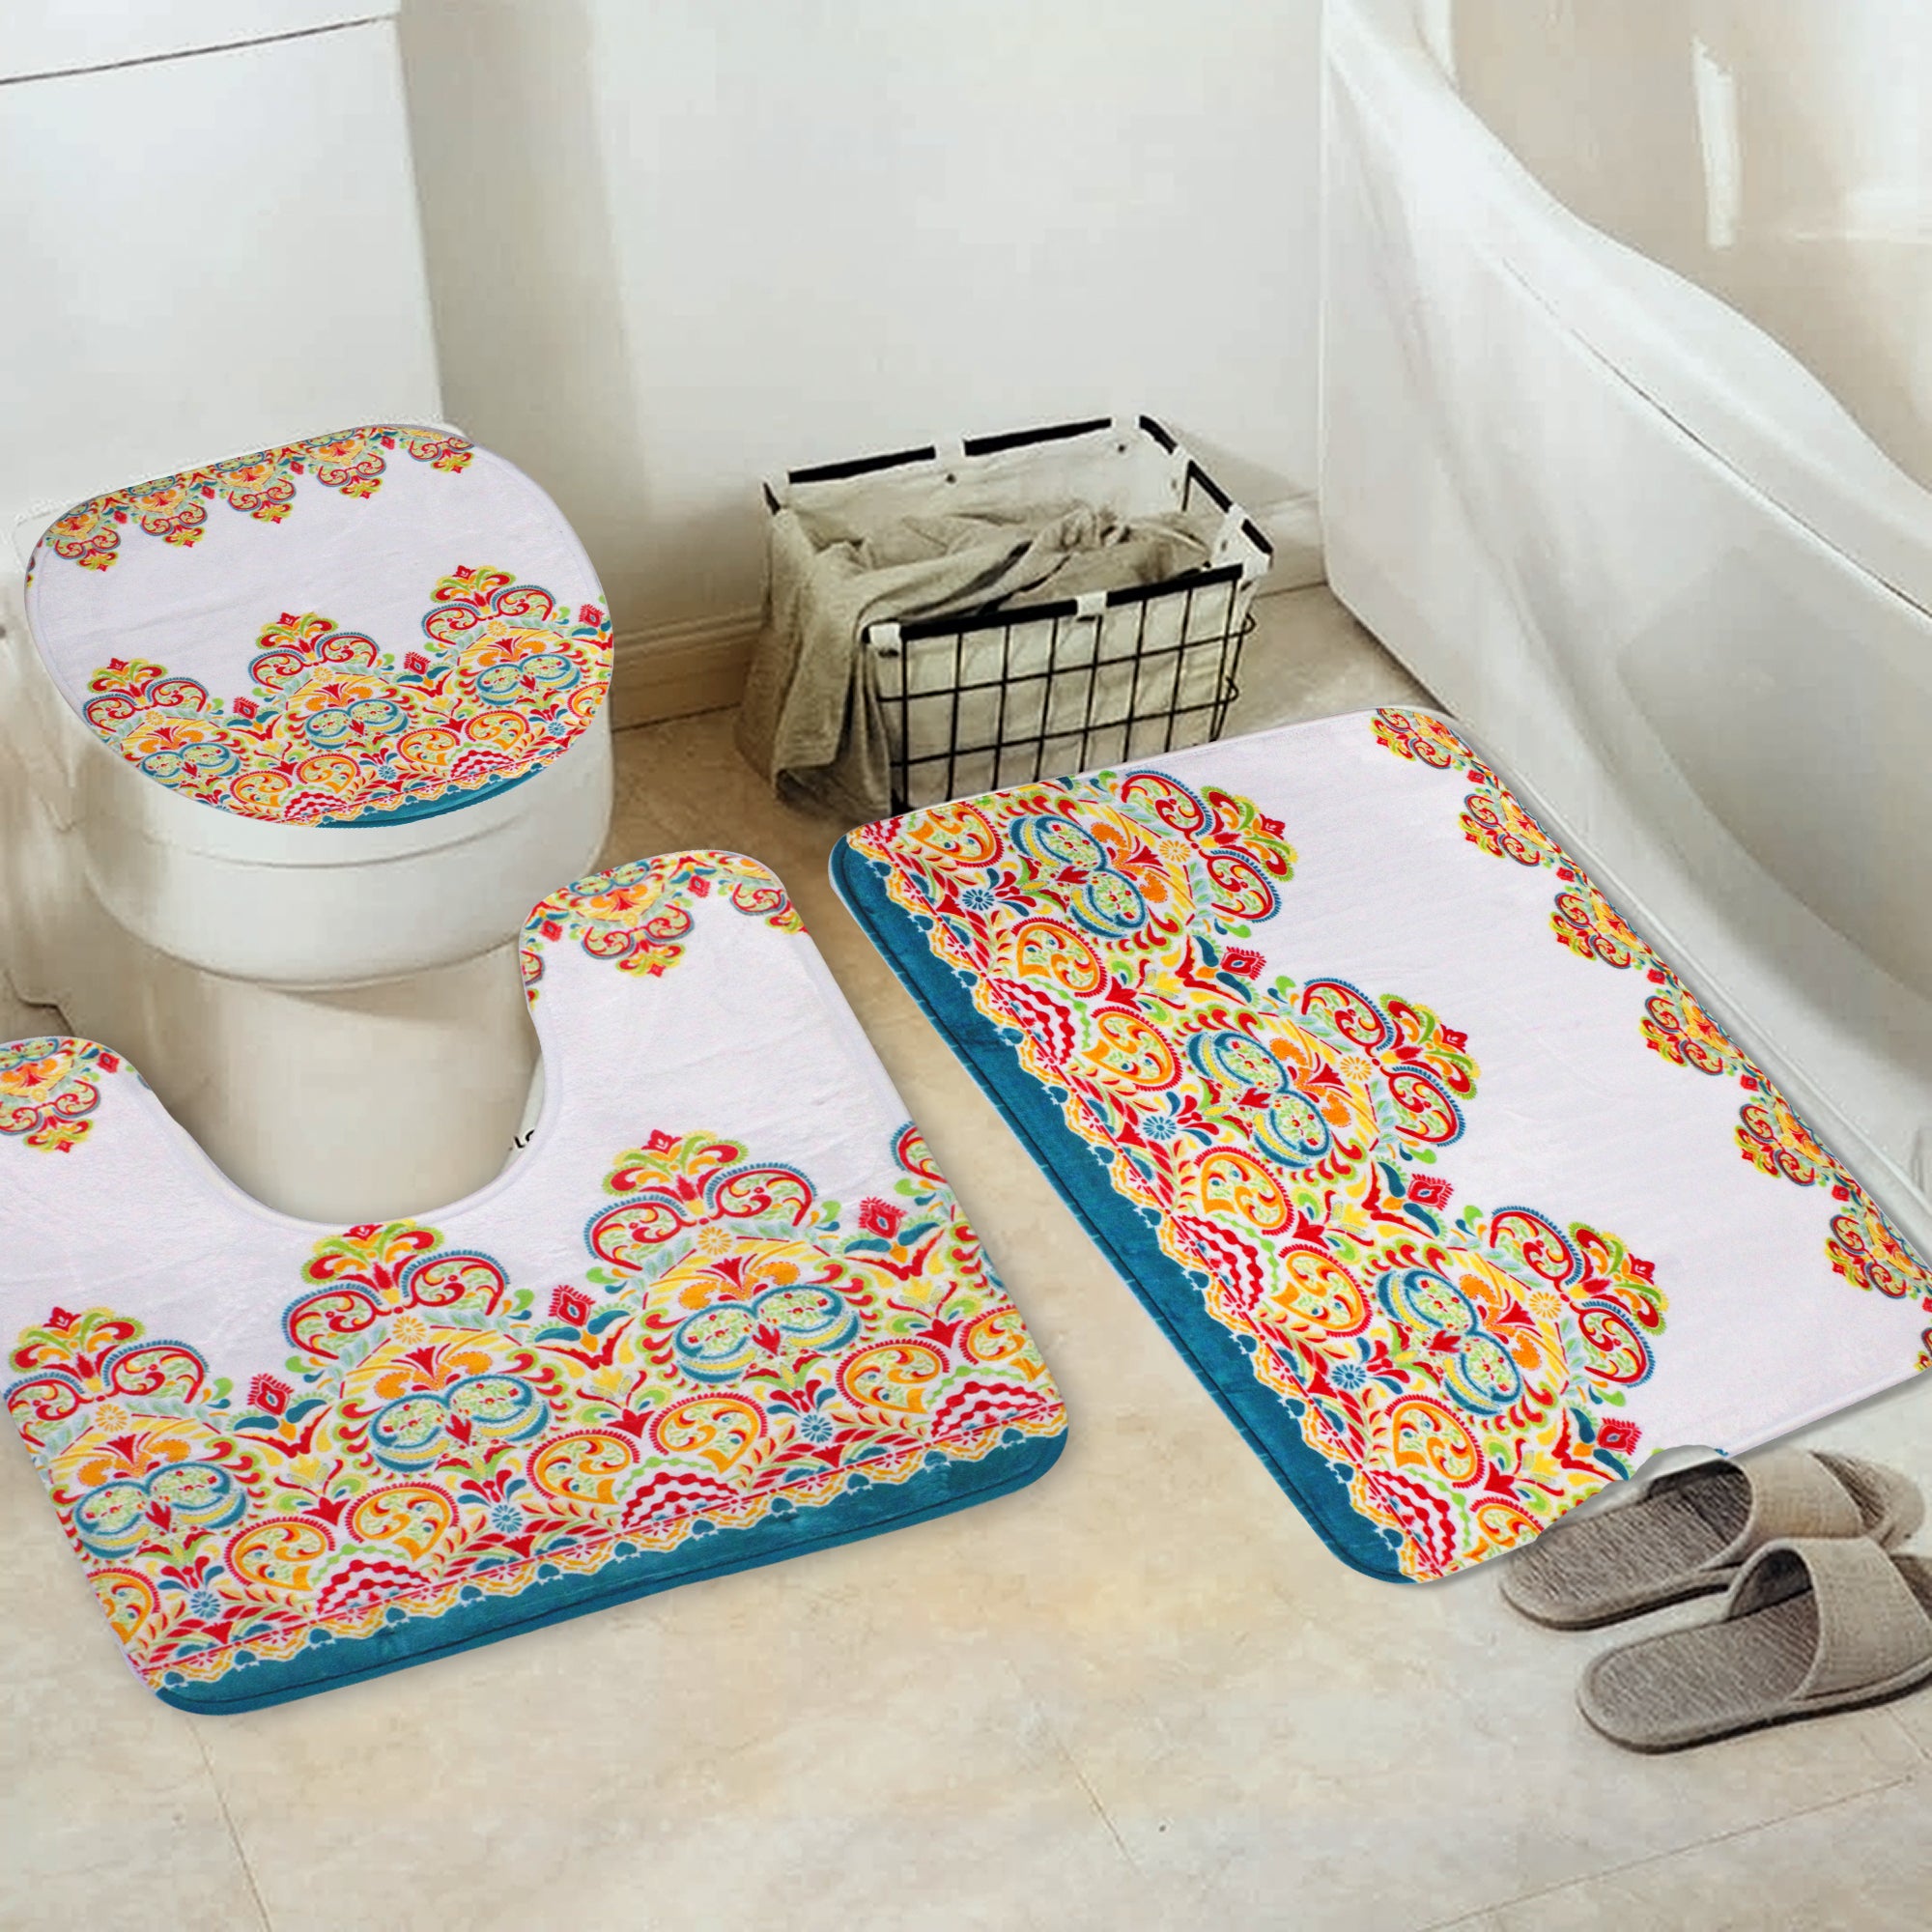 LMA 180cm Pattern Fabric Shower Curtain & 3 Piece Toilet Cover & Mat Set